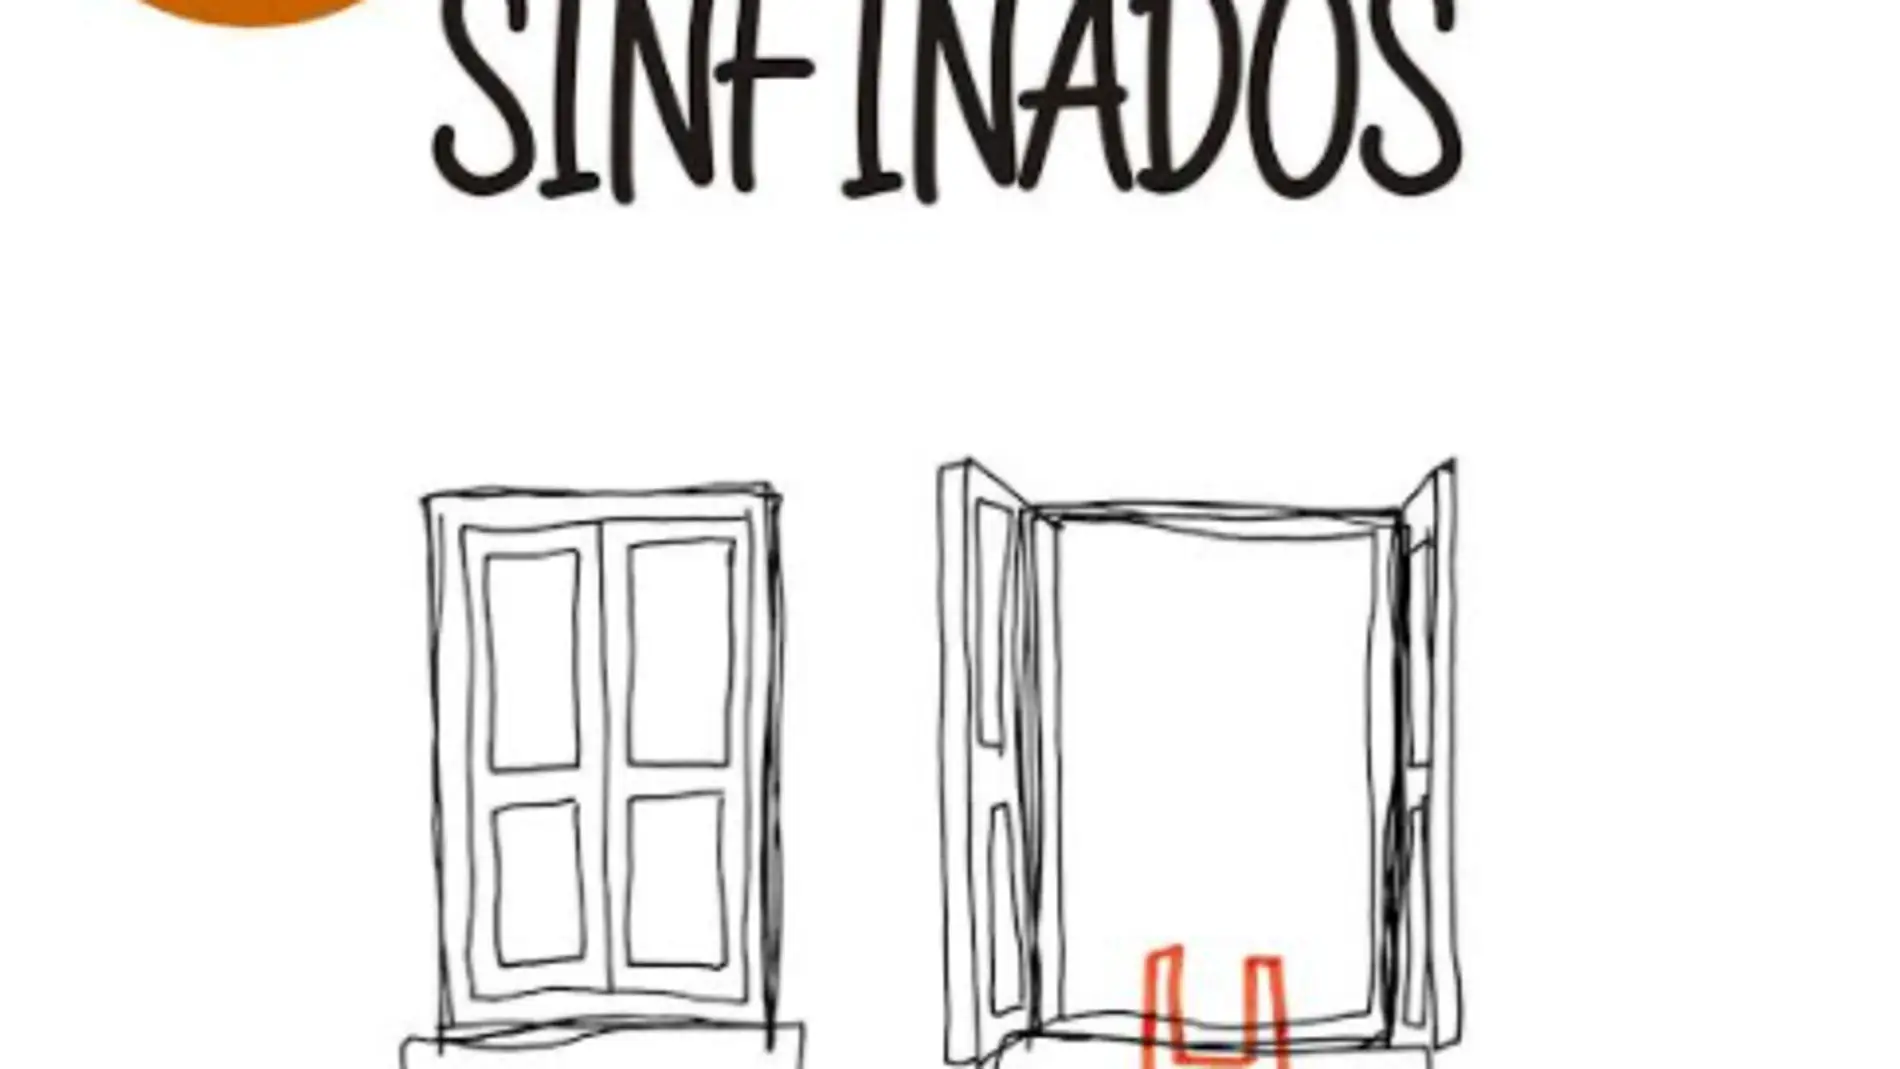 Colunga acoge la muestra "Sinfinados" de Toño Velasco